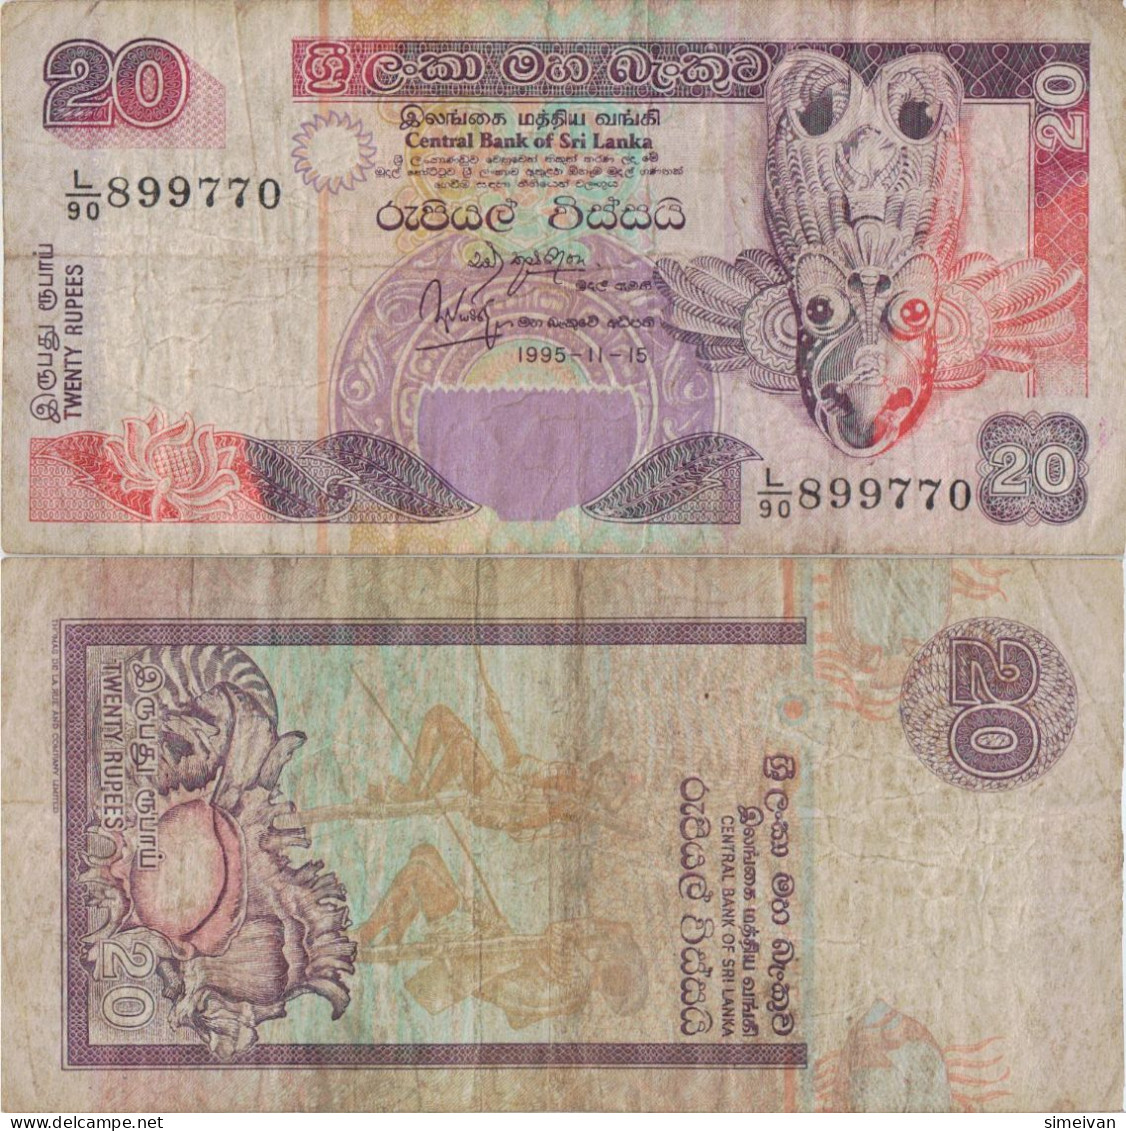 Sri Lanka 20 Rupees 1995 P-109a Banknote Asia Currency #5147 - Sri Lanka